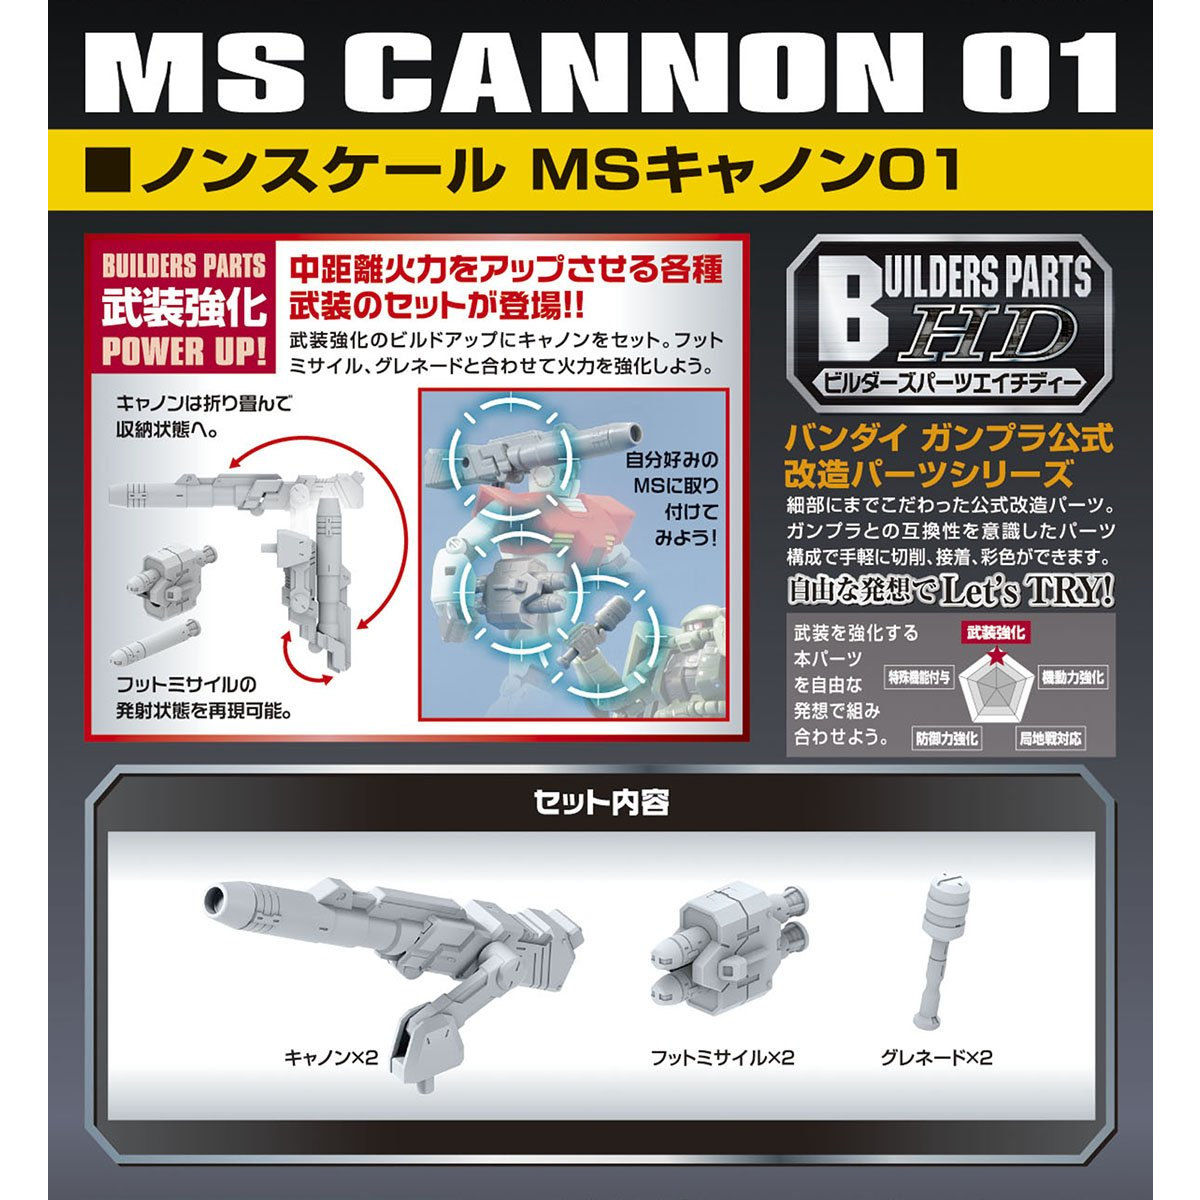 Builders Parts HD-29 Non-scale MS Cannon 01